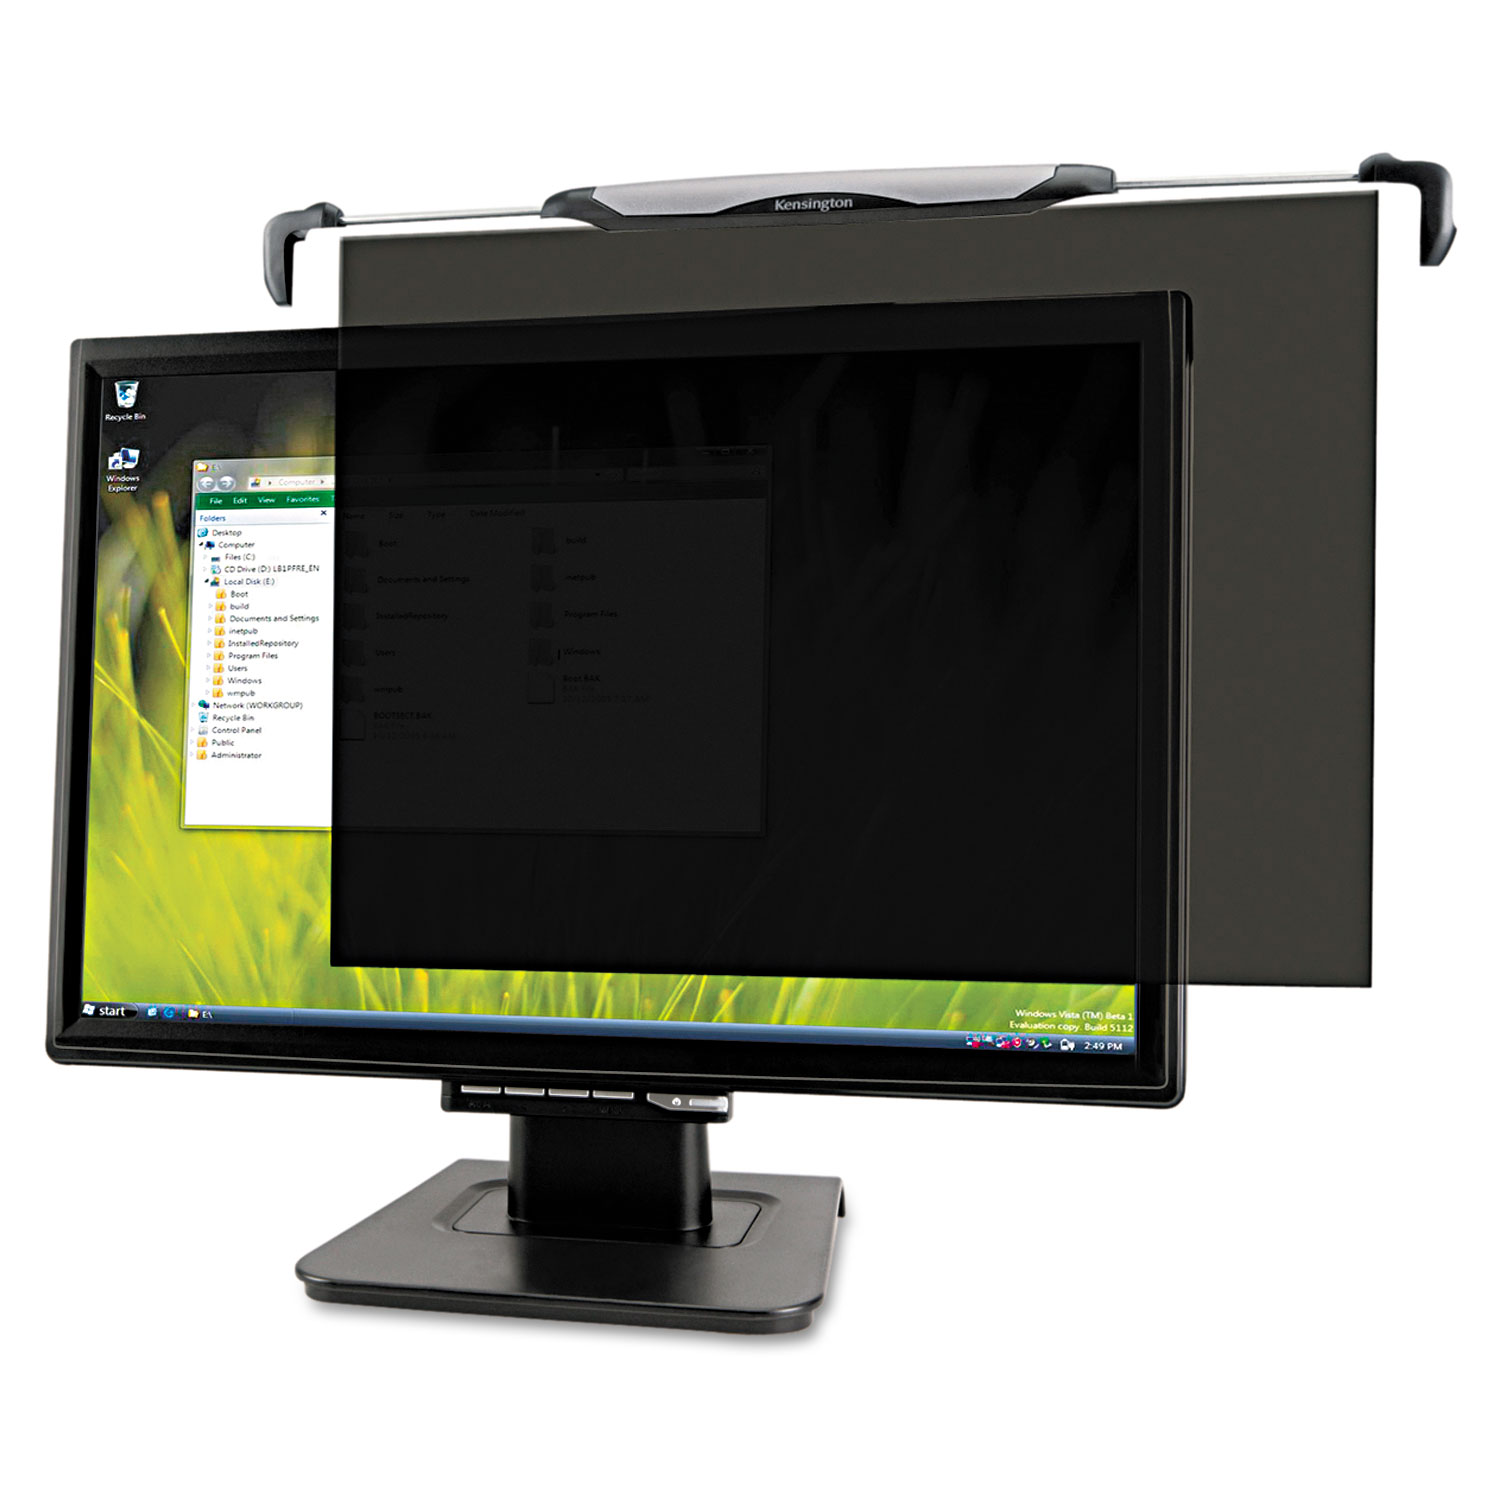  Kensington K55778WW Snap 2 Flat Panel Privacy Filter for 19 Widescreen LCD Monitors (KMW55778) 